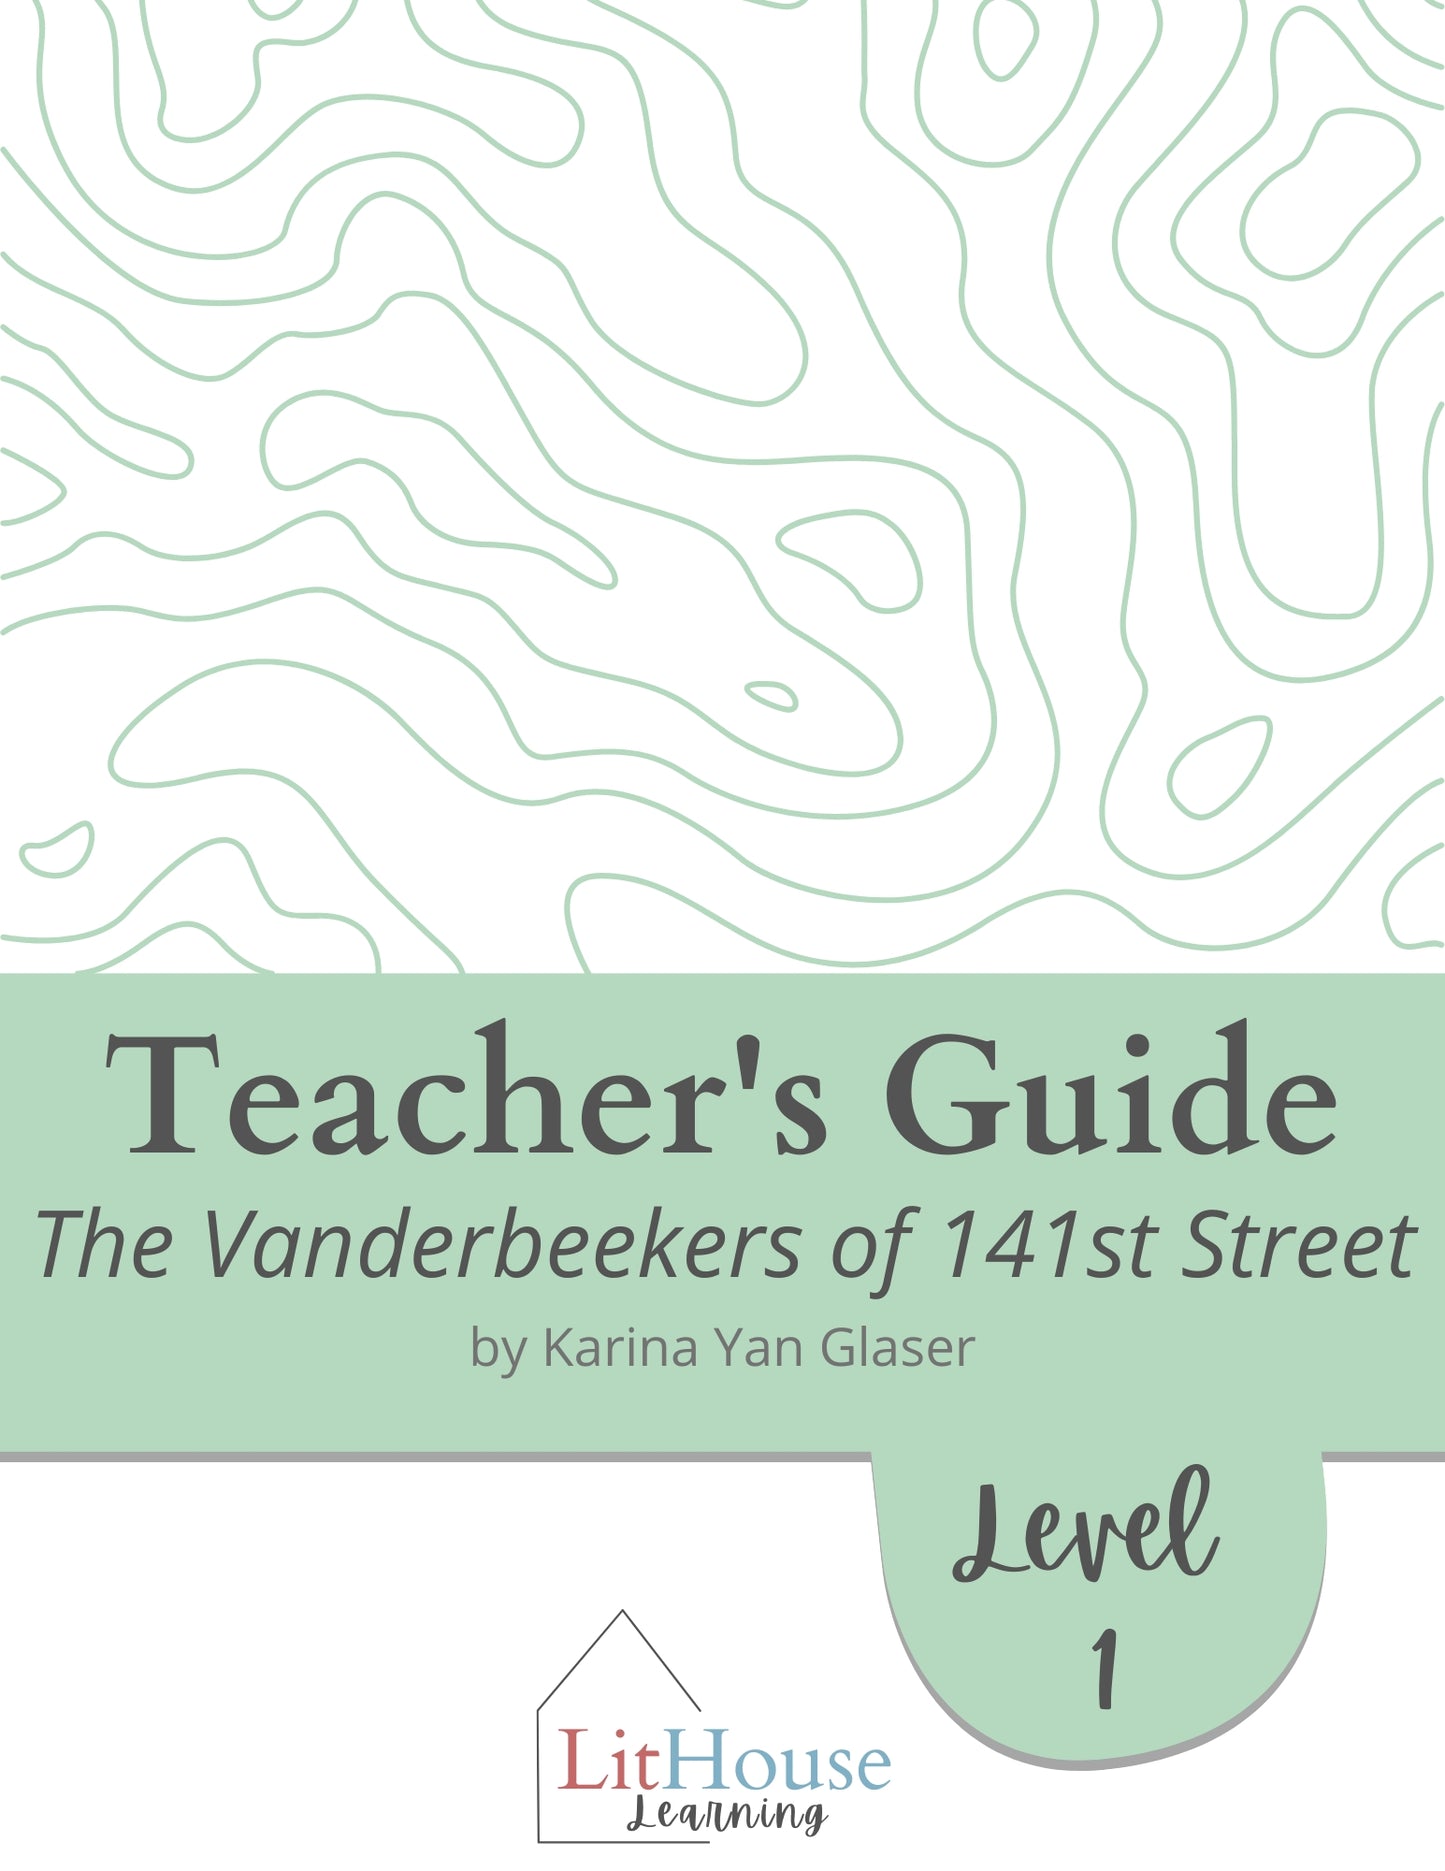 The Vanderbeekers of 141st Street Novel Study